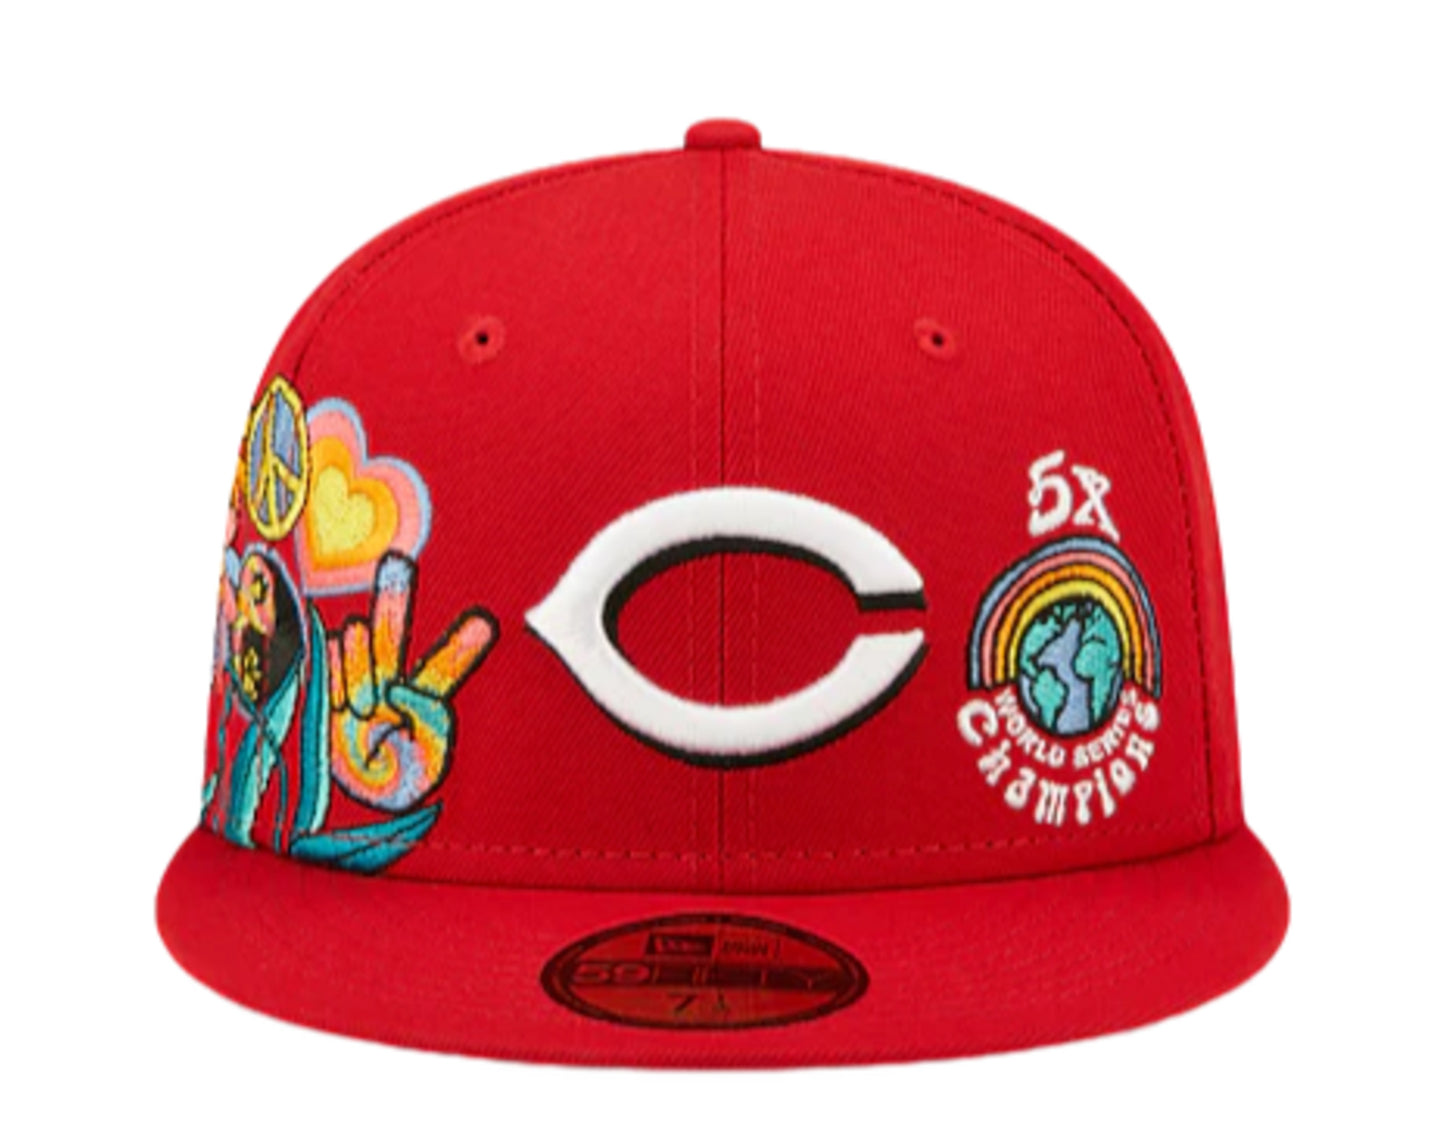 New Era 59Fifty MLB Cincinnati Reds Groovy Fitted Hat